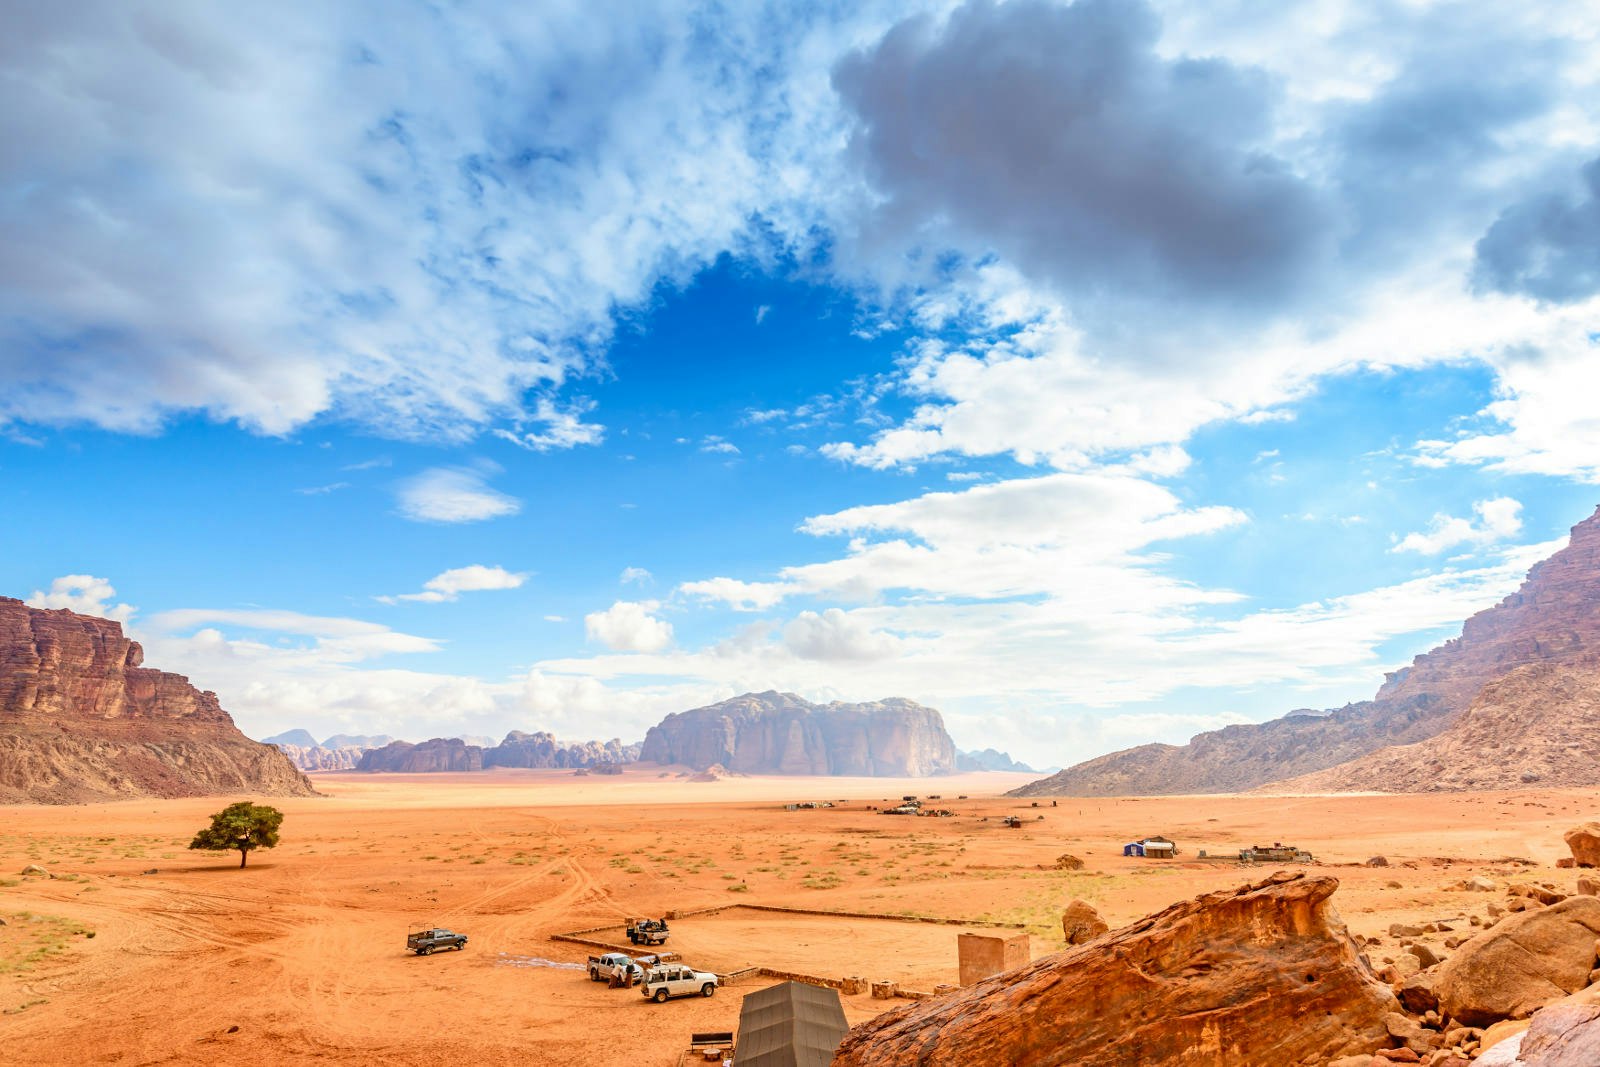 Desert in Wadi Rum, Jordan, viewed from the Lawrence of Arabia's Spring. Image by Richard Yoshida / Shutterstock